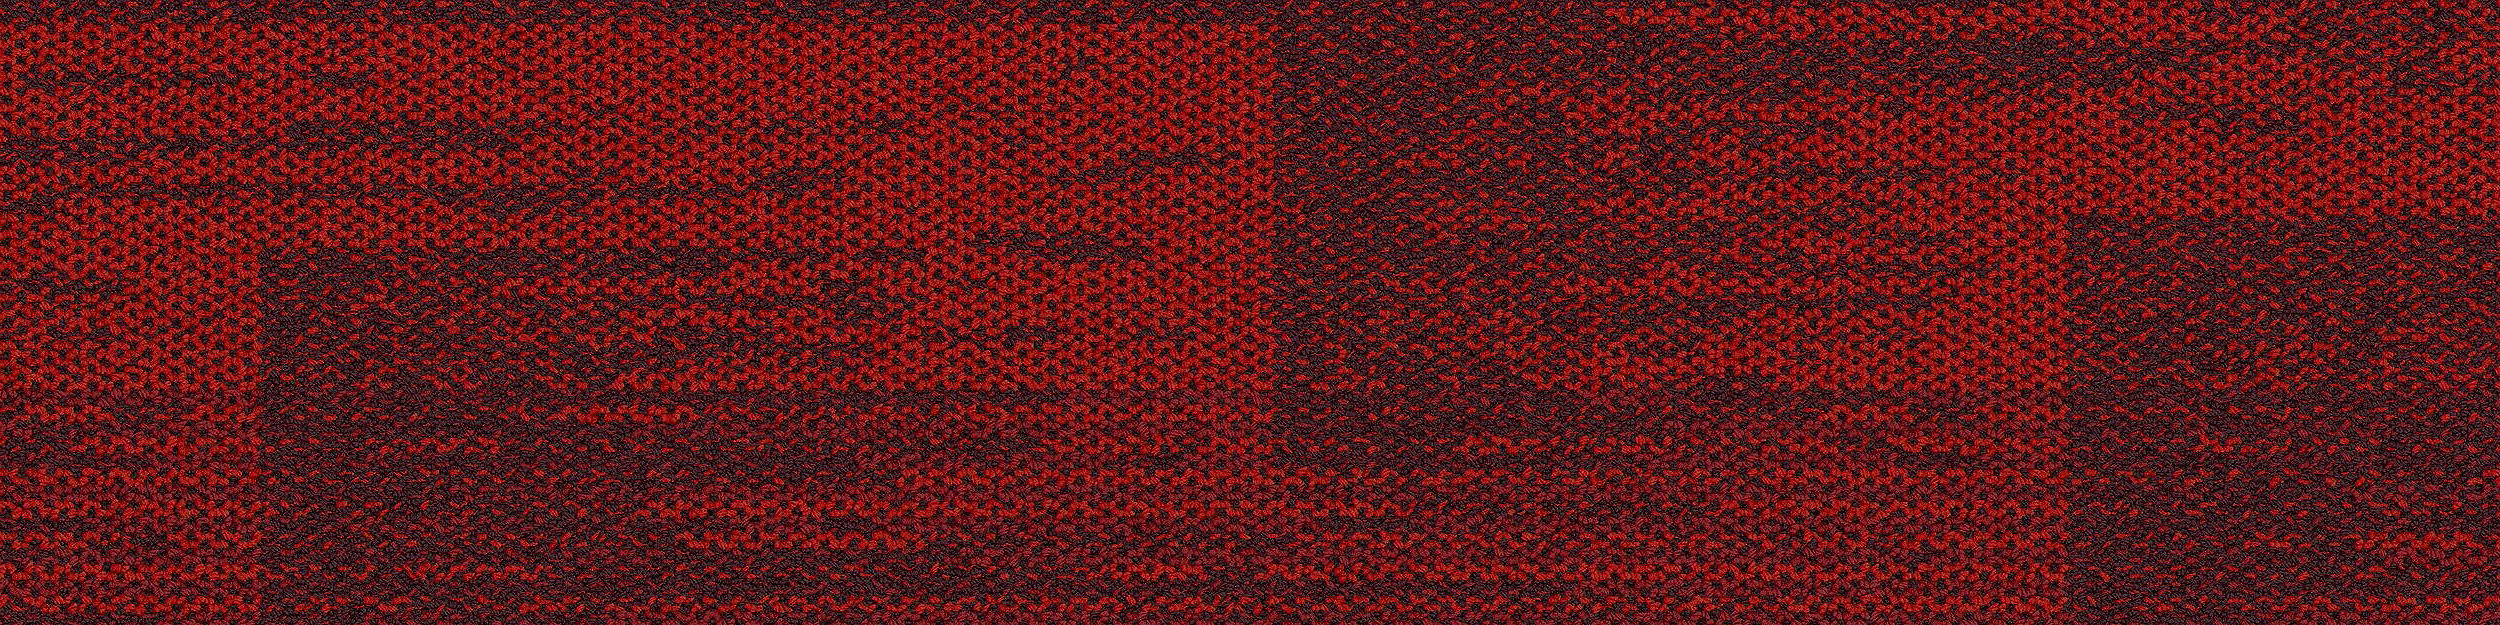 AE317 Carpet Tile In Berry imagen número 13